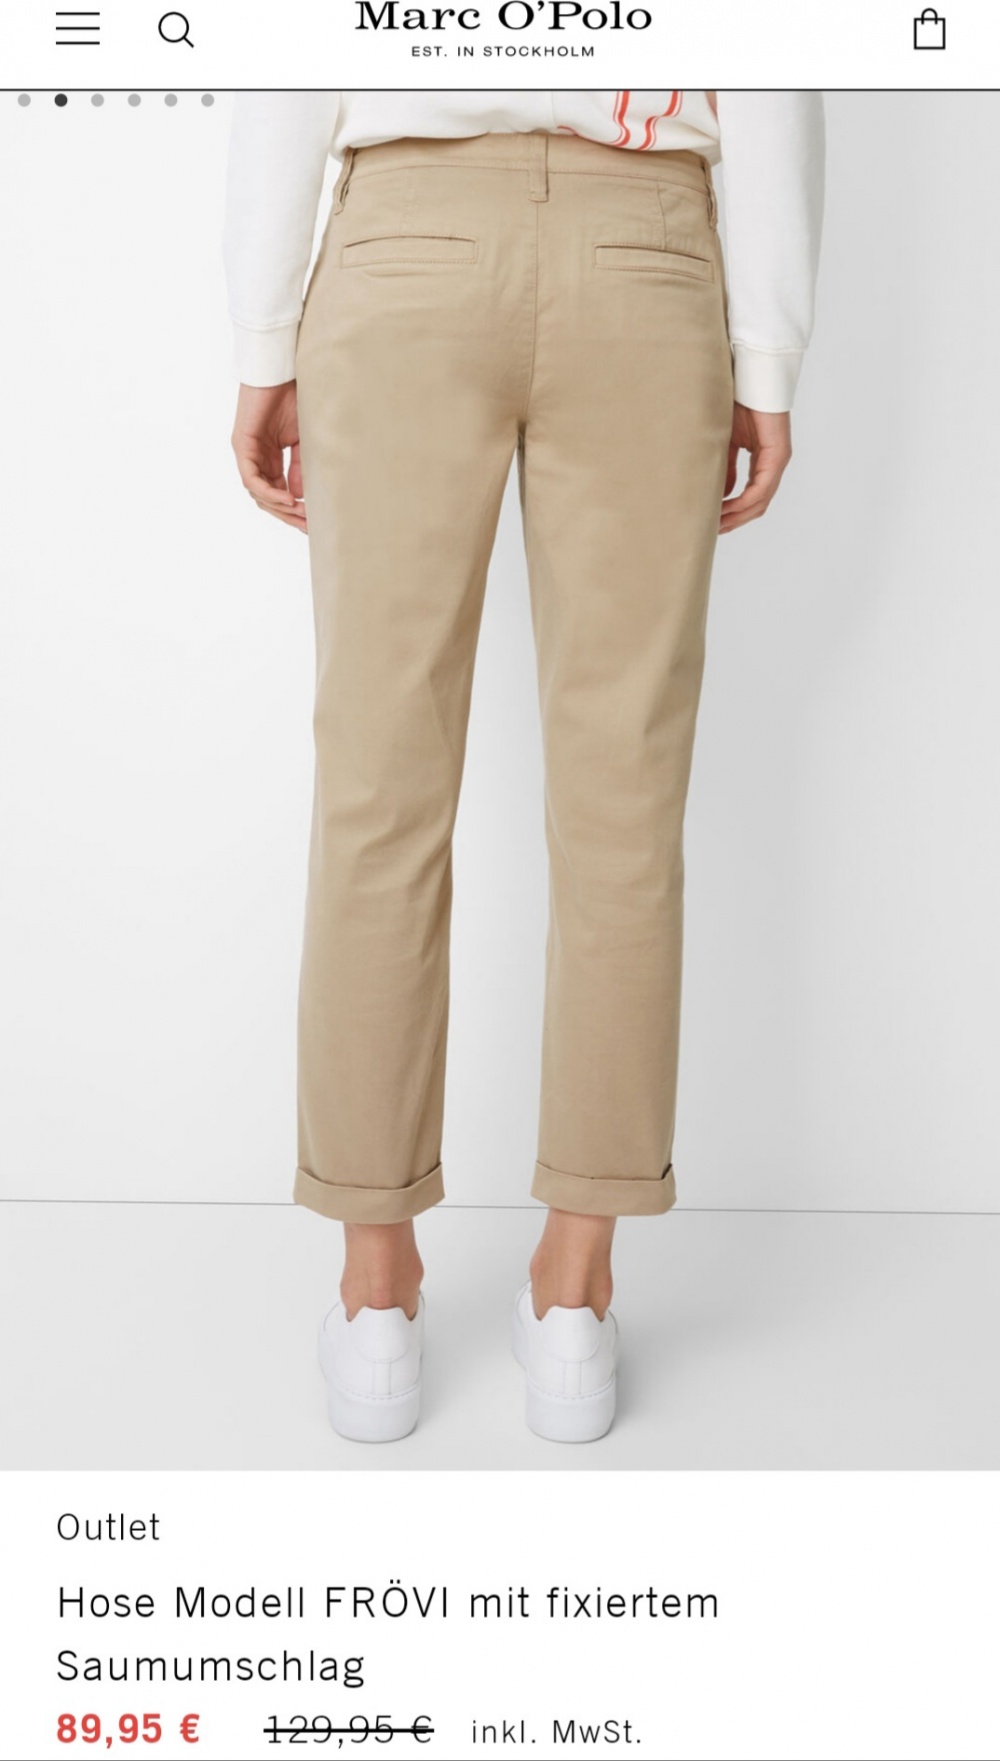 Укороченные брюки Marc O'Polo,46 размер